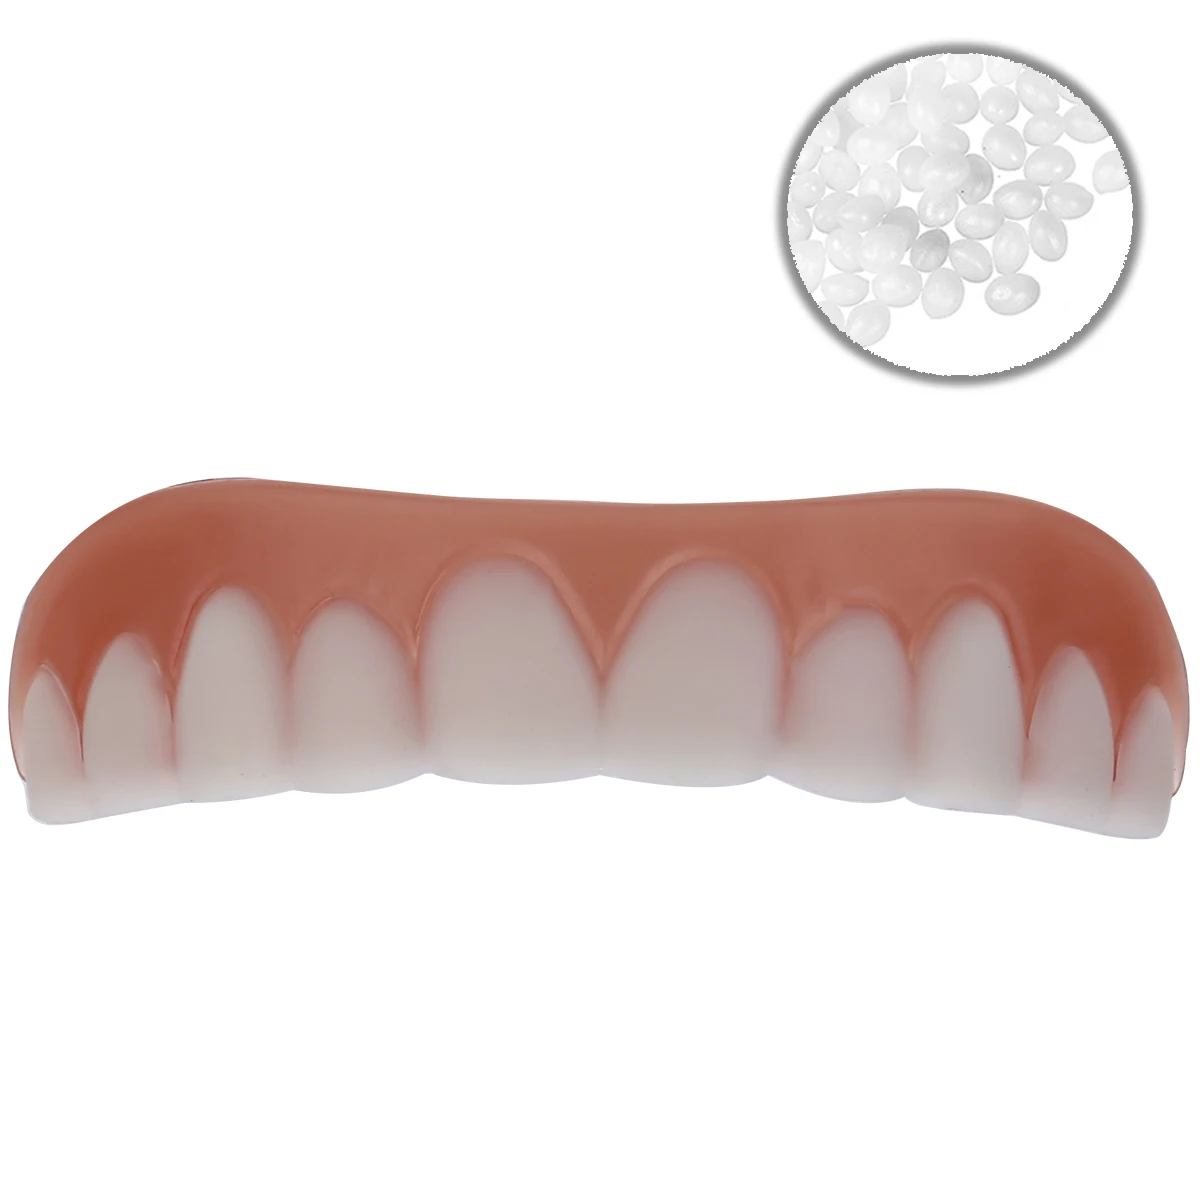 H46b1108d8d3a461e8285eb46d724a6d5B Beauty-Health Cosmetic Teeth Veneer Dentures